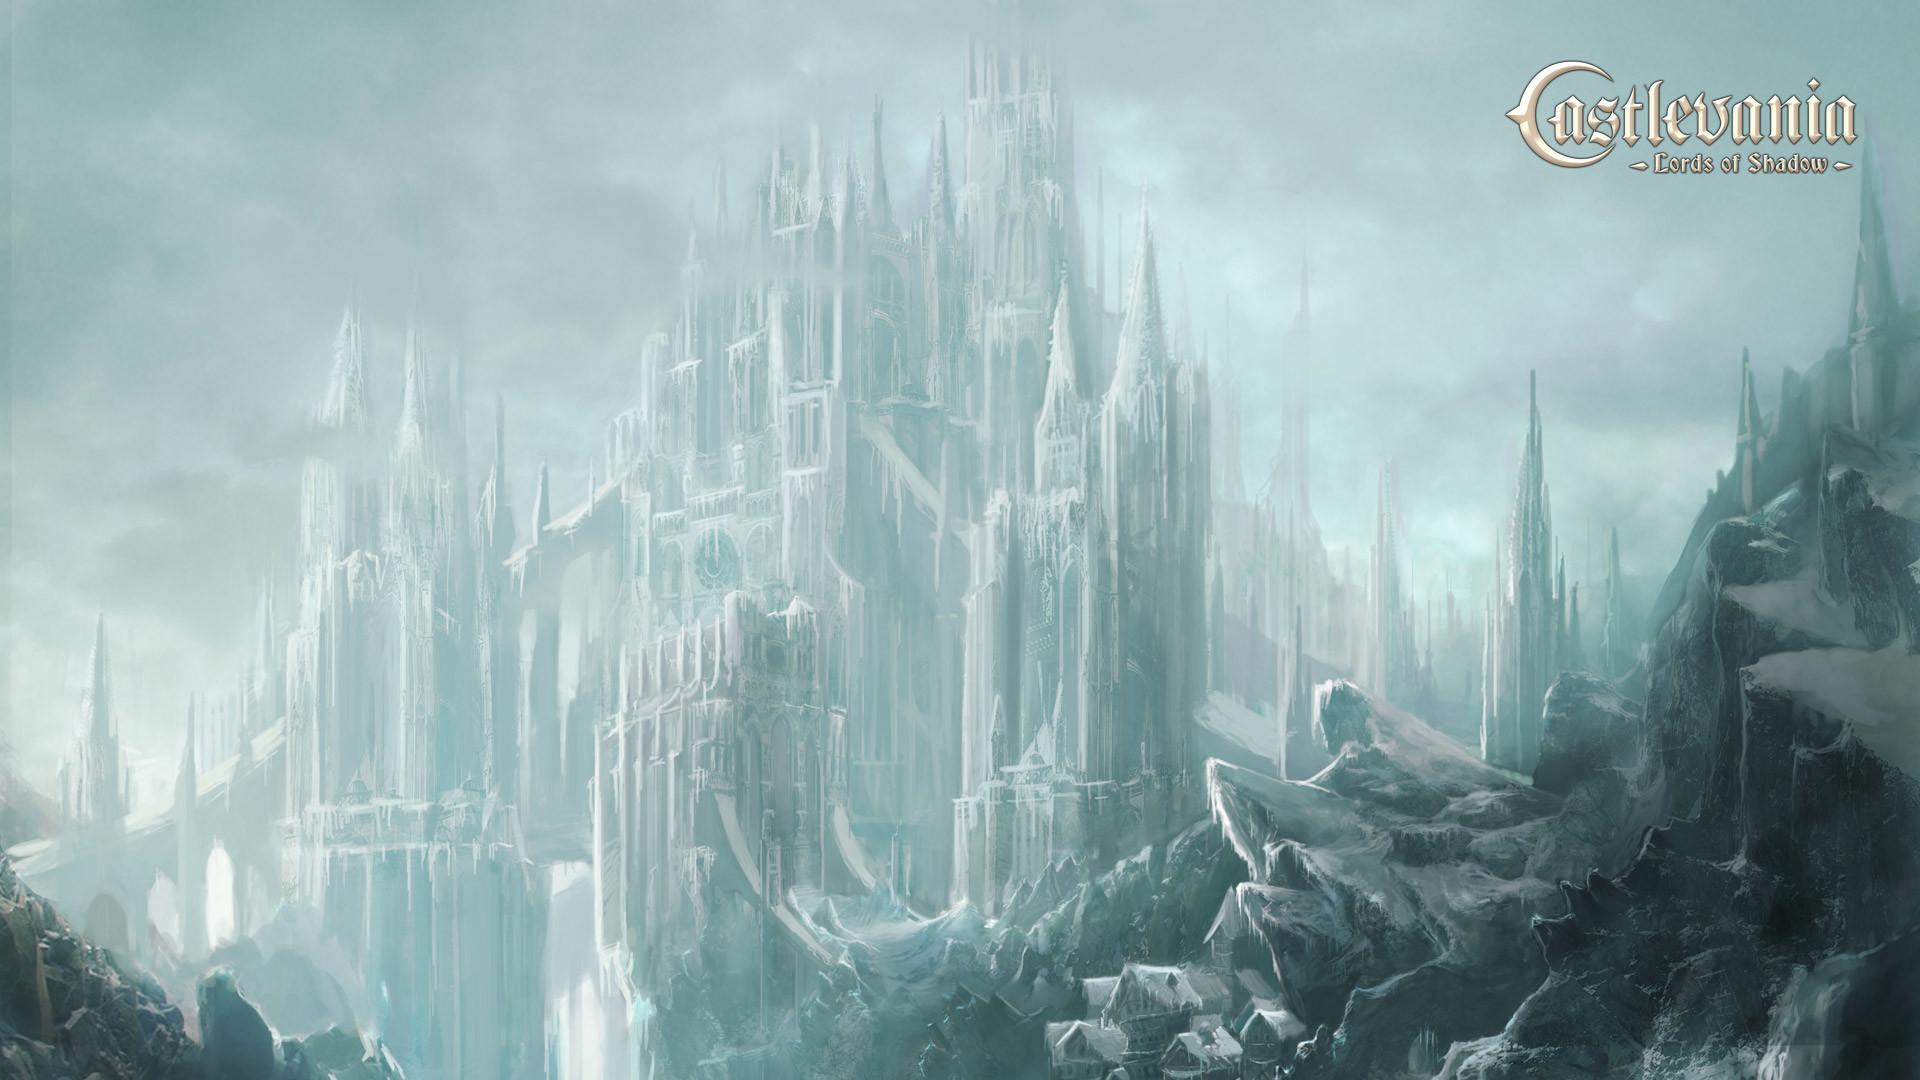 Castlevania Wallpaper background picture